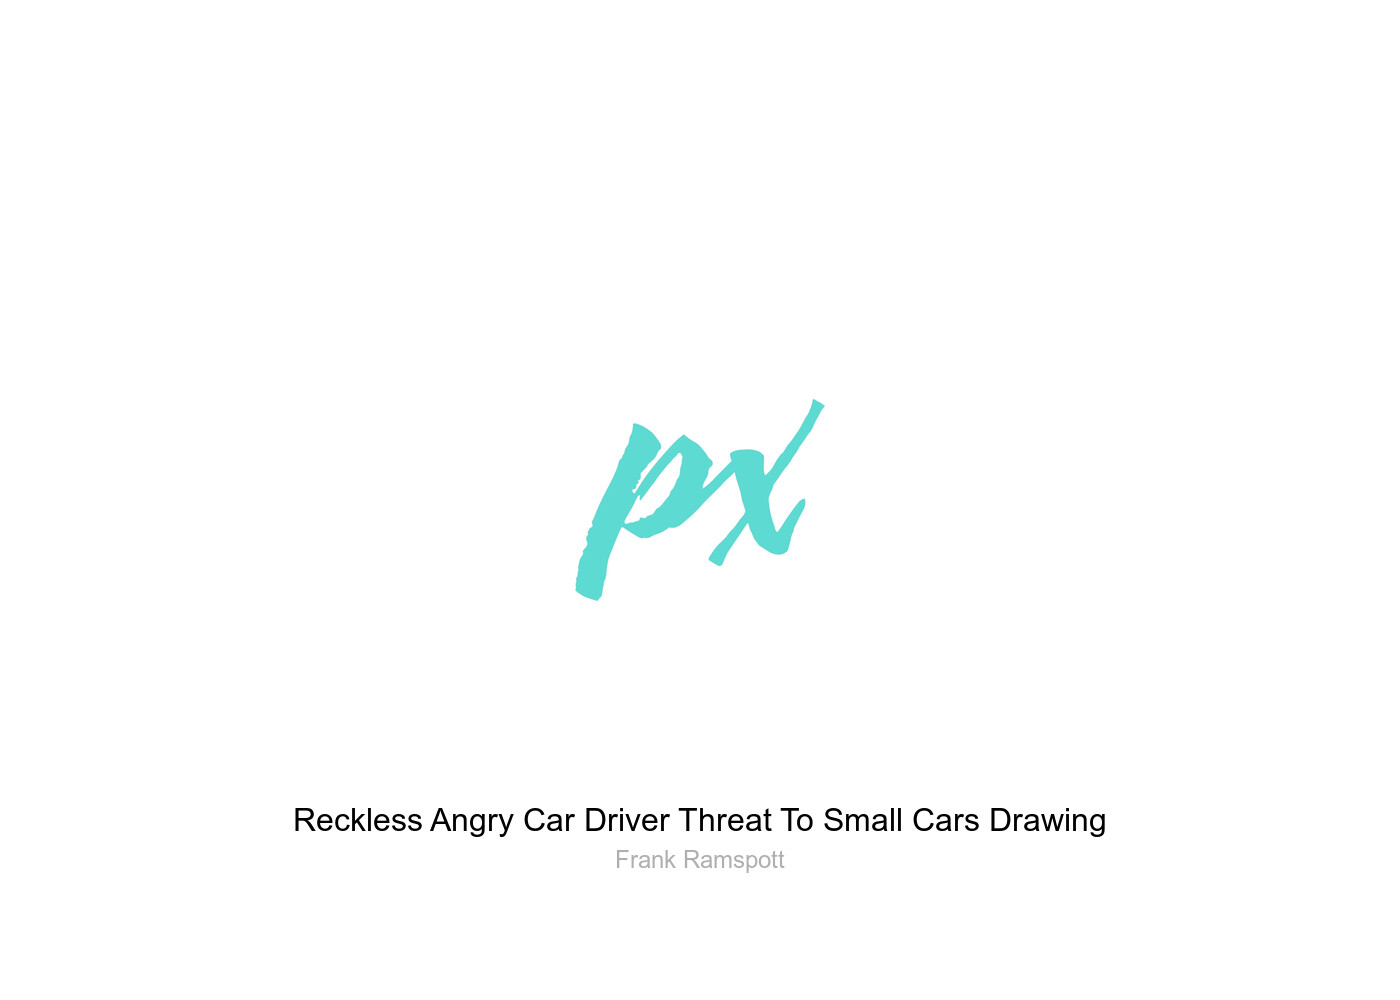 https://render.fineartamerica.com/images/rendered/backview/greeting-card/blank.jpg?artistName=Frank+Ramspott&artworkName=Reckless+Angry+Car+Driver+Threat+To+Small+Cars+Drawing&orientation=0&memberIdType=artistid&memberId=208492&domainName=pixels.com